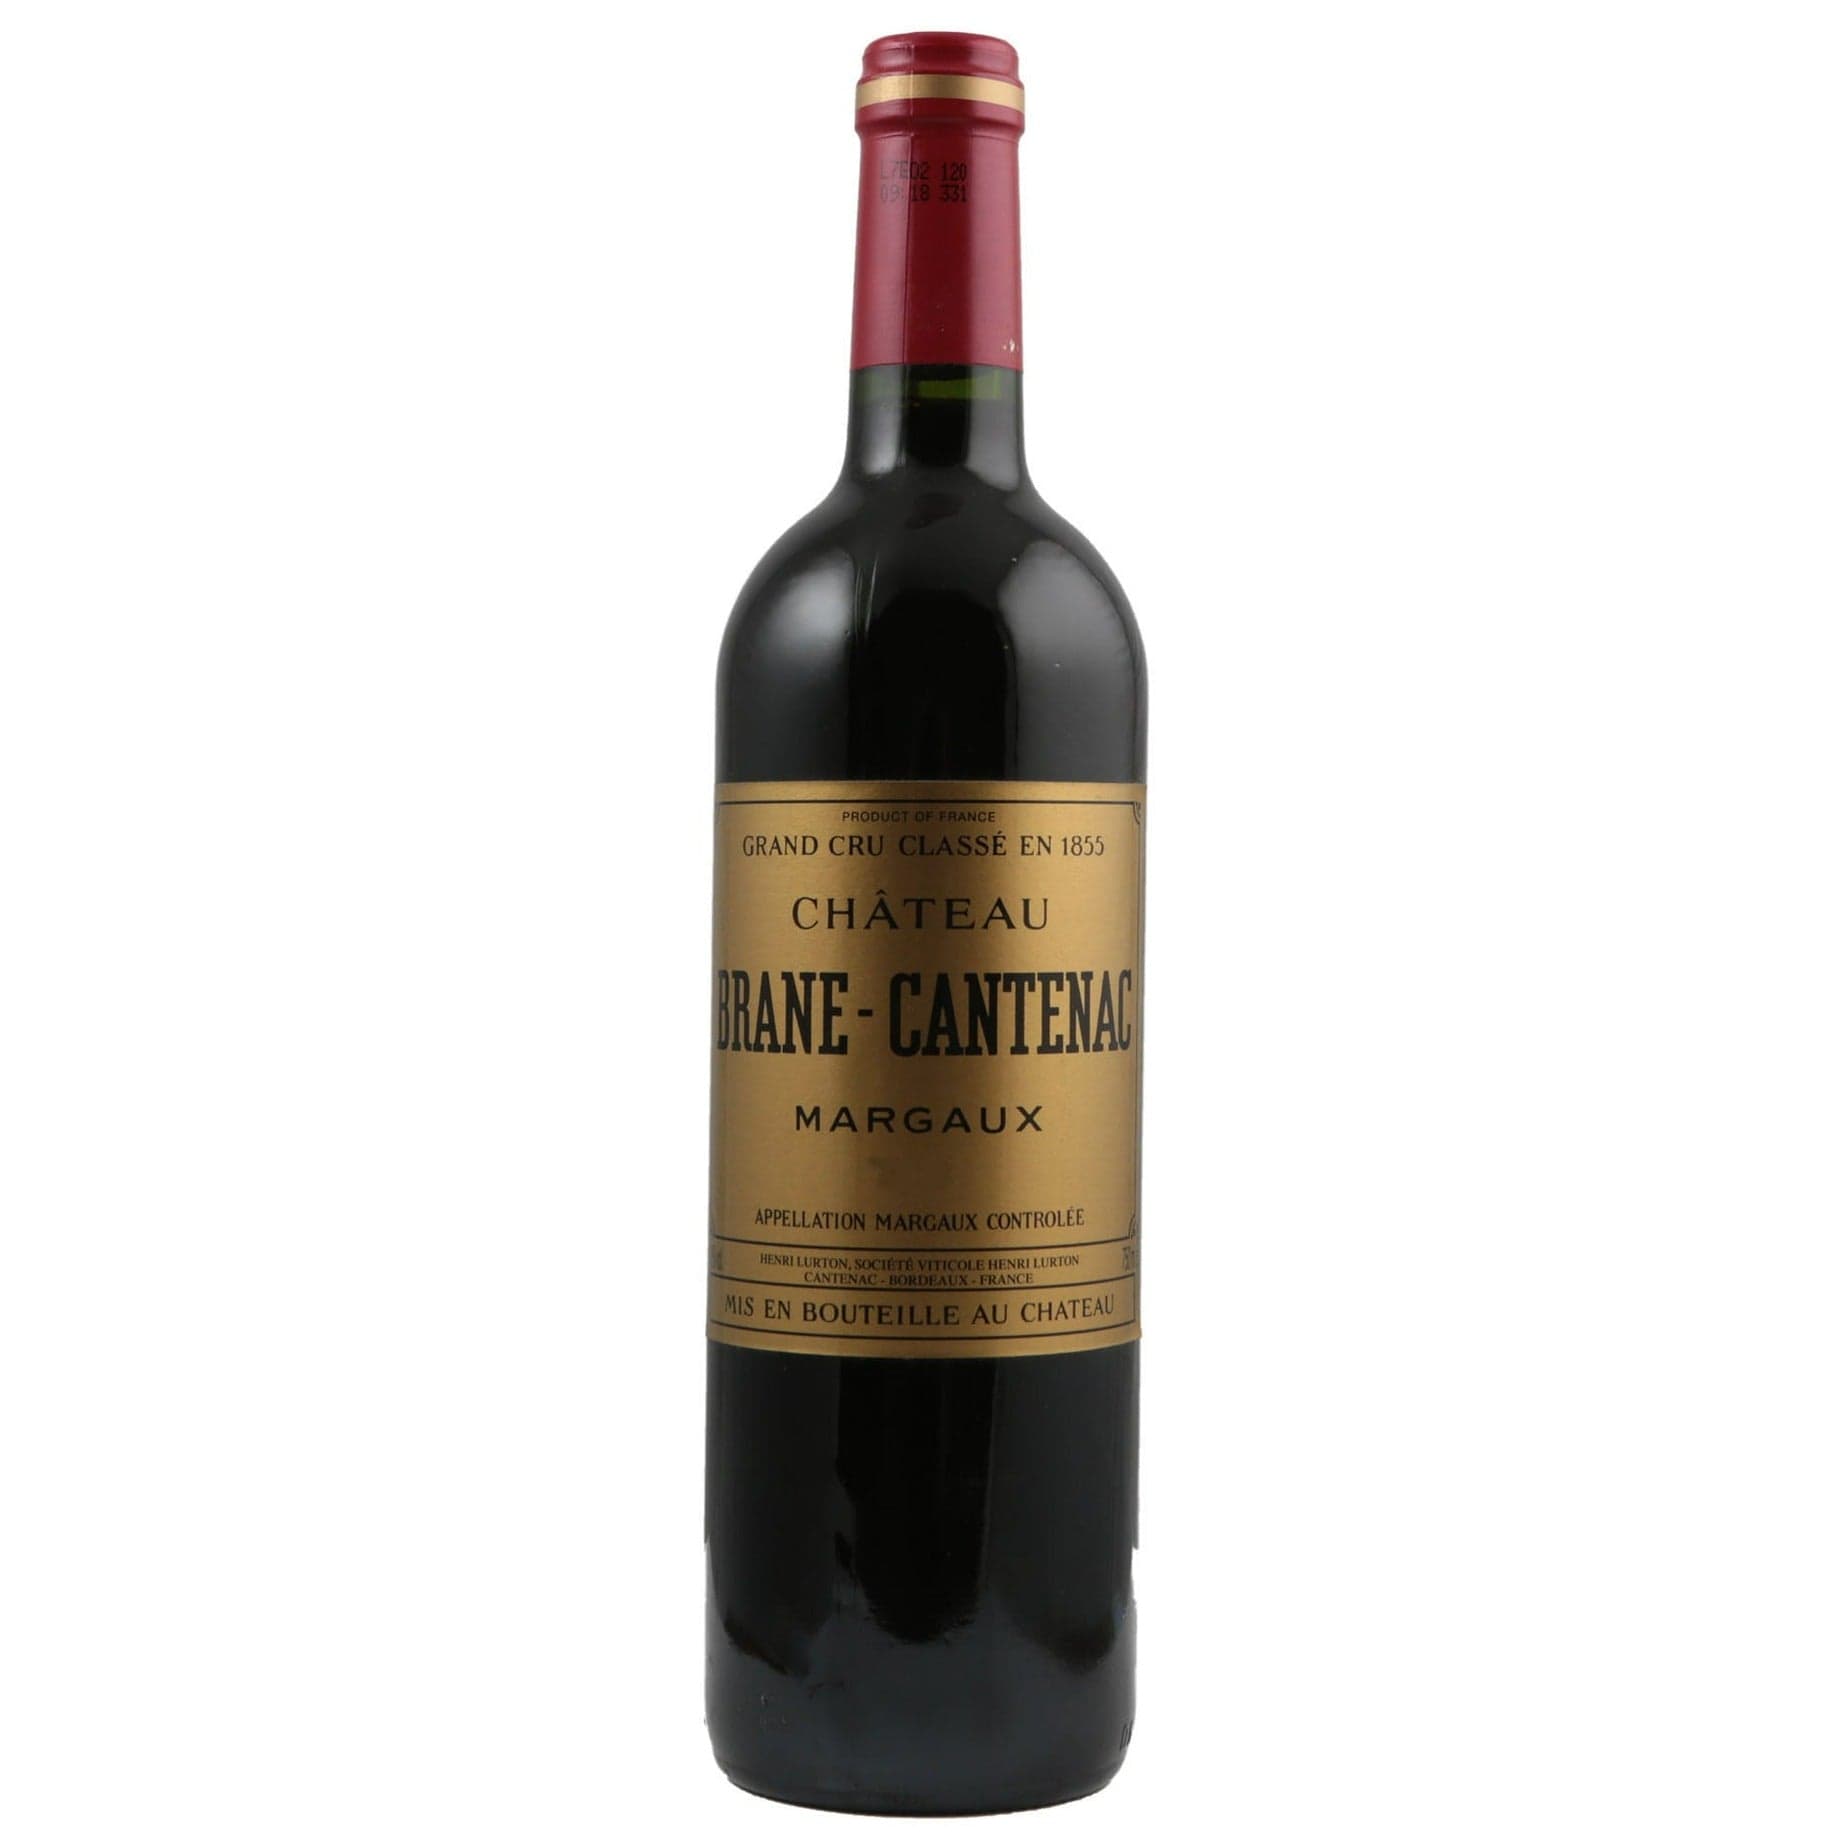 Single bottle of Red wine Ch. Brane-Cantenac, 2nd Growth Grand Cru Classe, Margaux, 2009 53% Cabernet Sauvignon, 40% Merlot & 7% Cabernet Franc